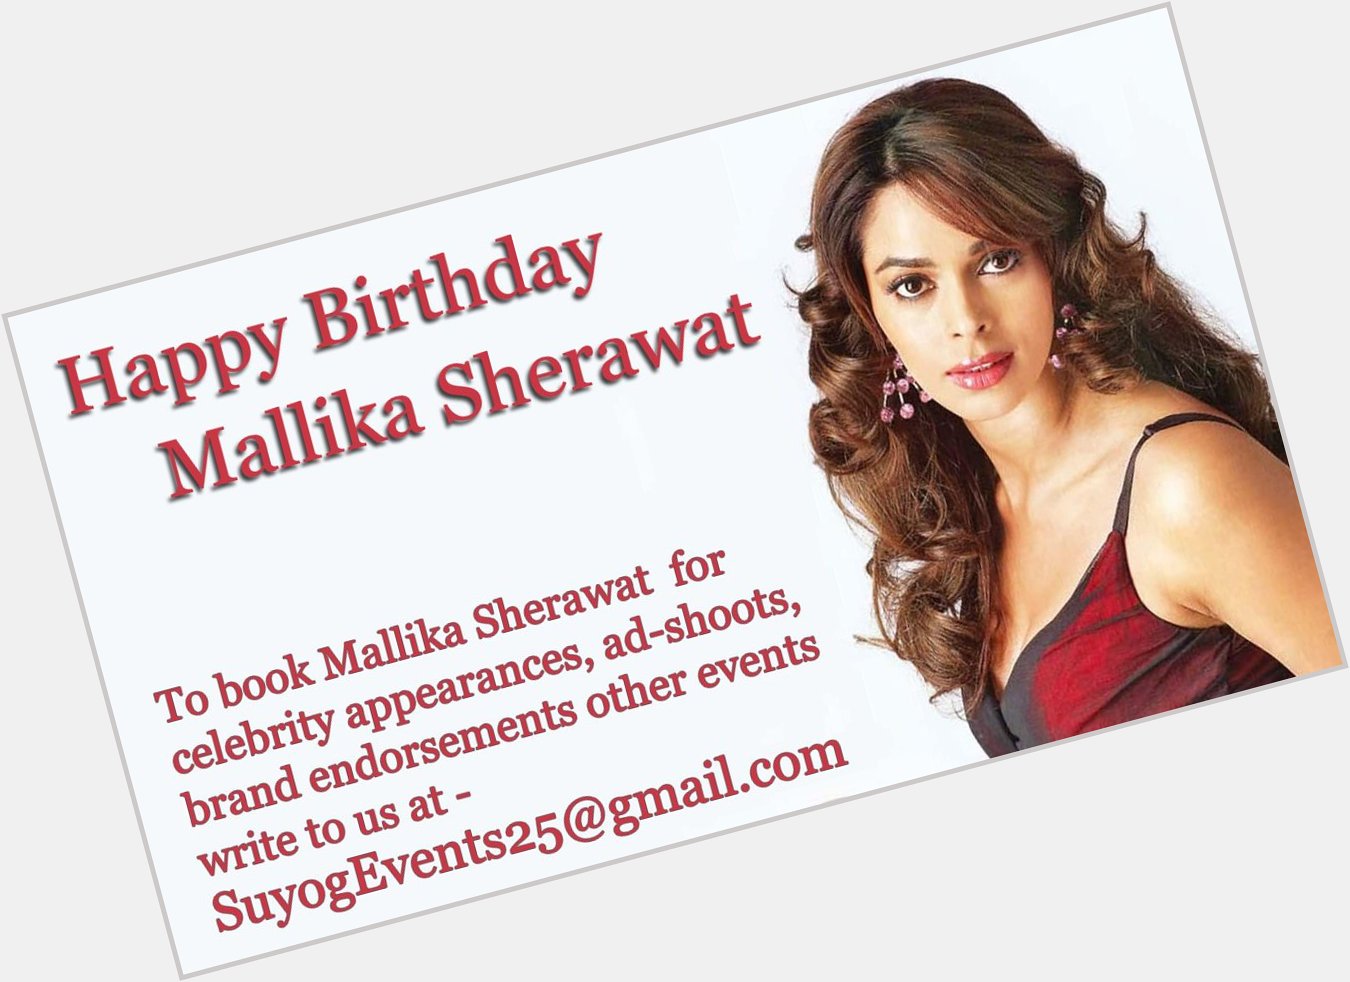 Happy Birthday Mallika Sherawat !
We wish a very Happy Birthday to hottest actress !!! 